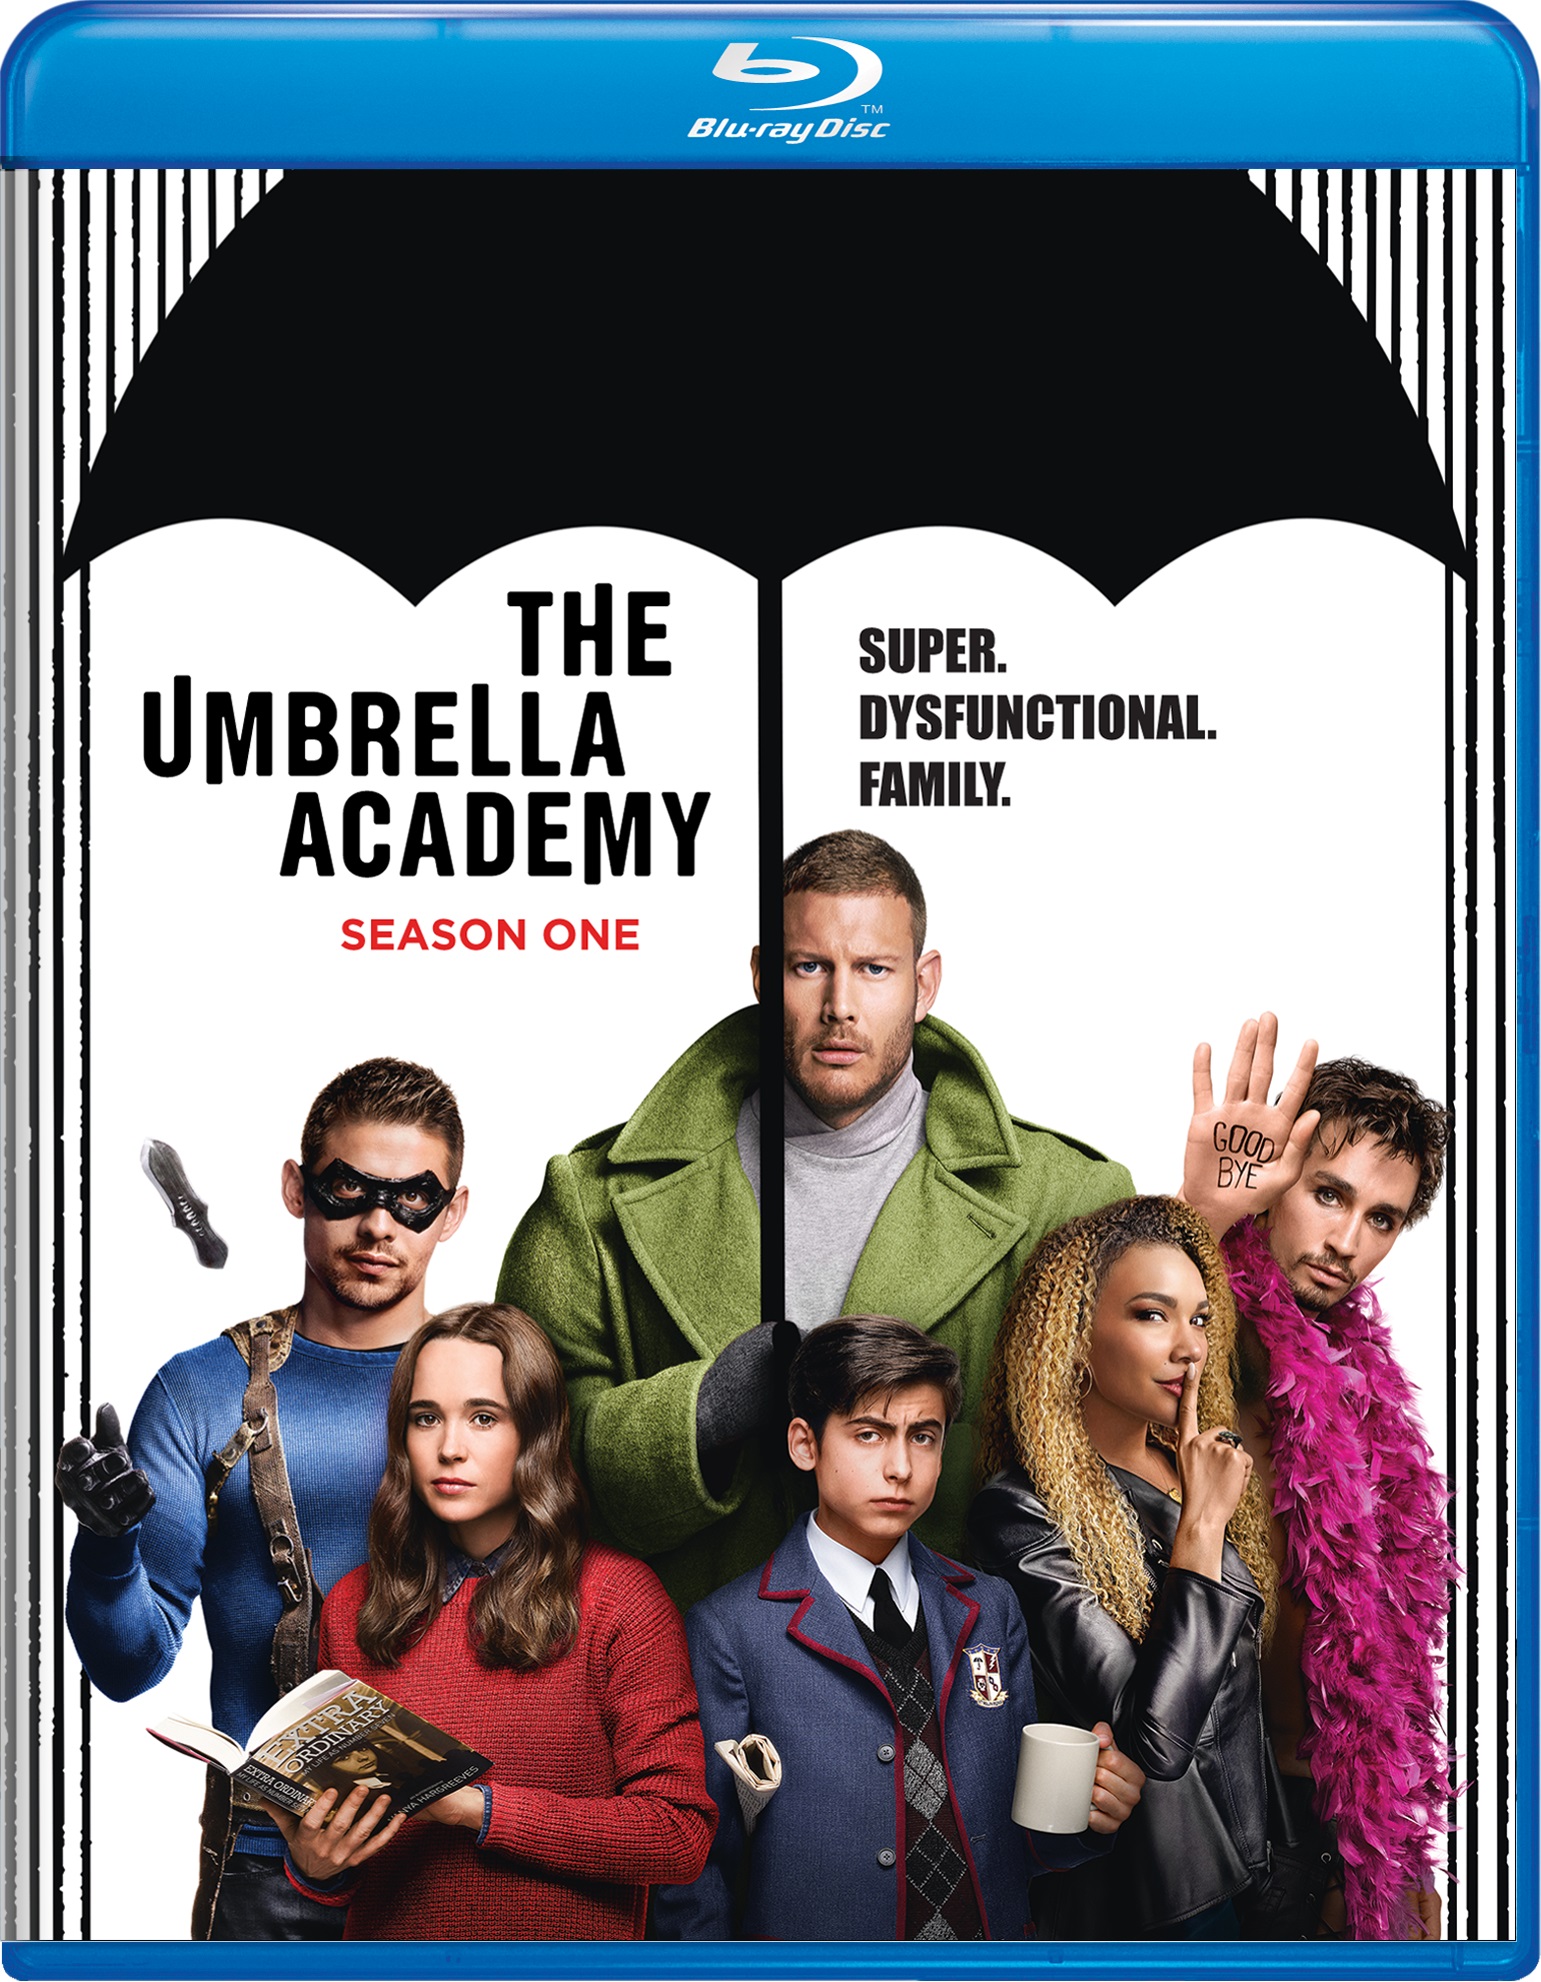 The Umbrella Academy: Season One - Blu-ray [ 2019 ]  - Sci Fi Television On Blu-ray - TV Shows On GRUV